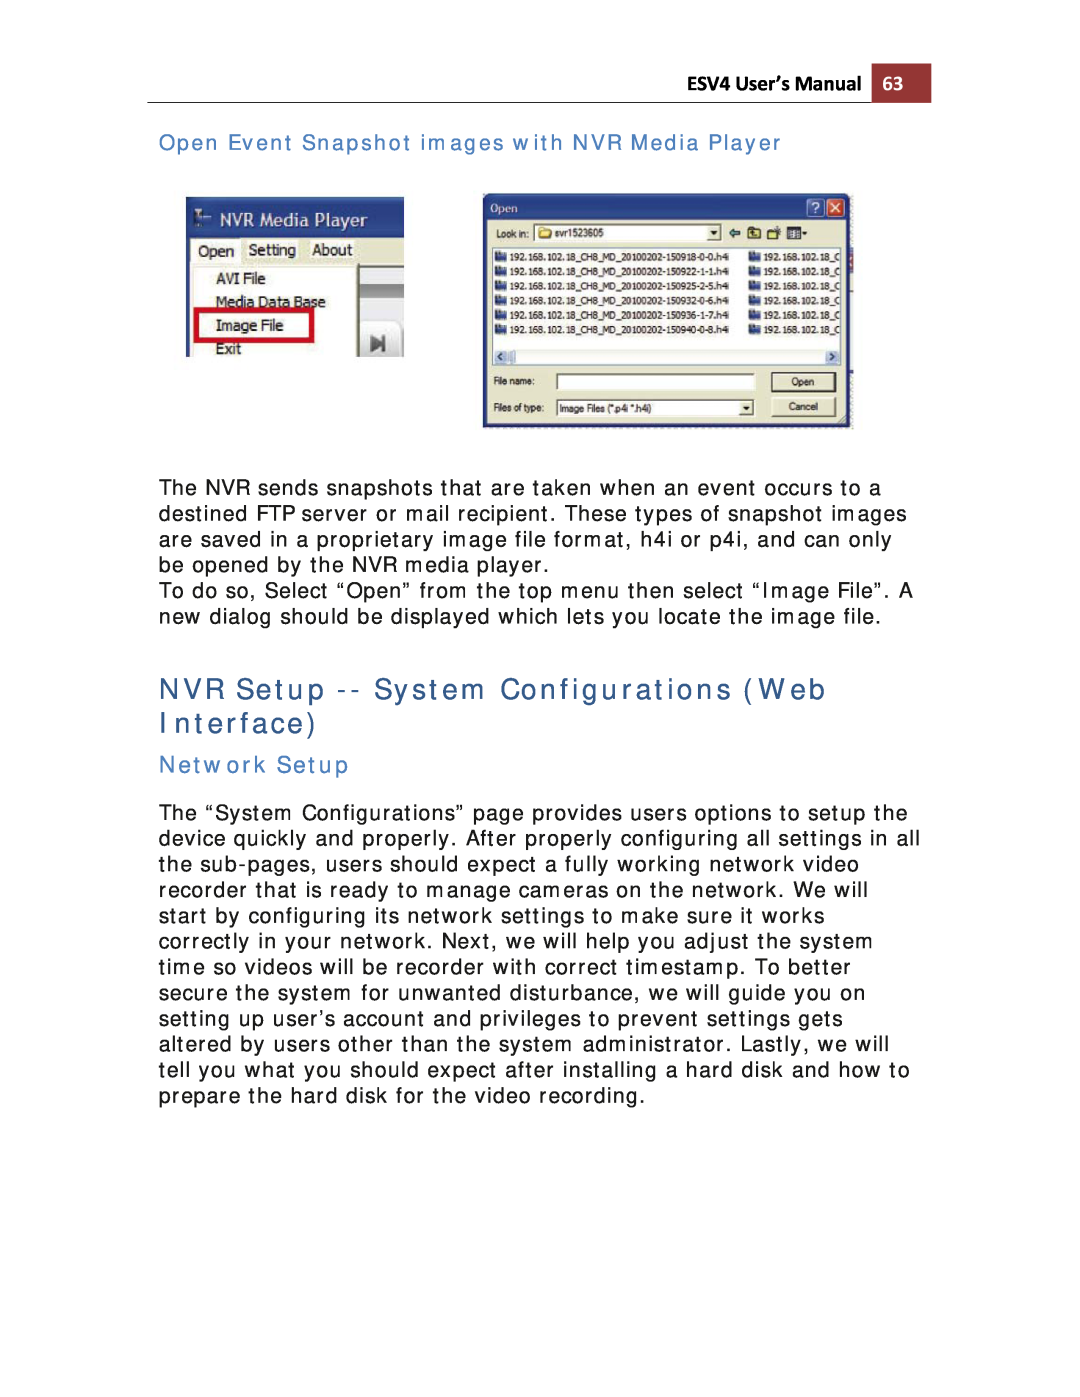 Toshiba ESV41T user manual NVR Setup --System Configurations Web Interface, Network Setup, ESV4 User’s Manual 